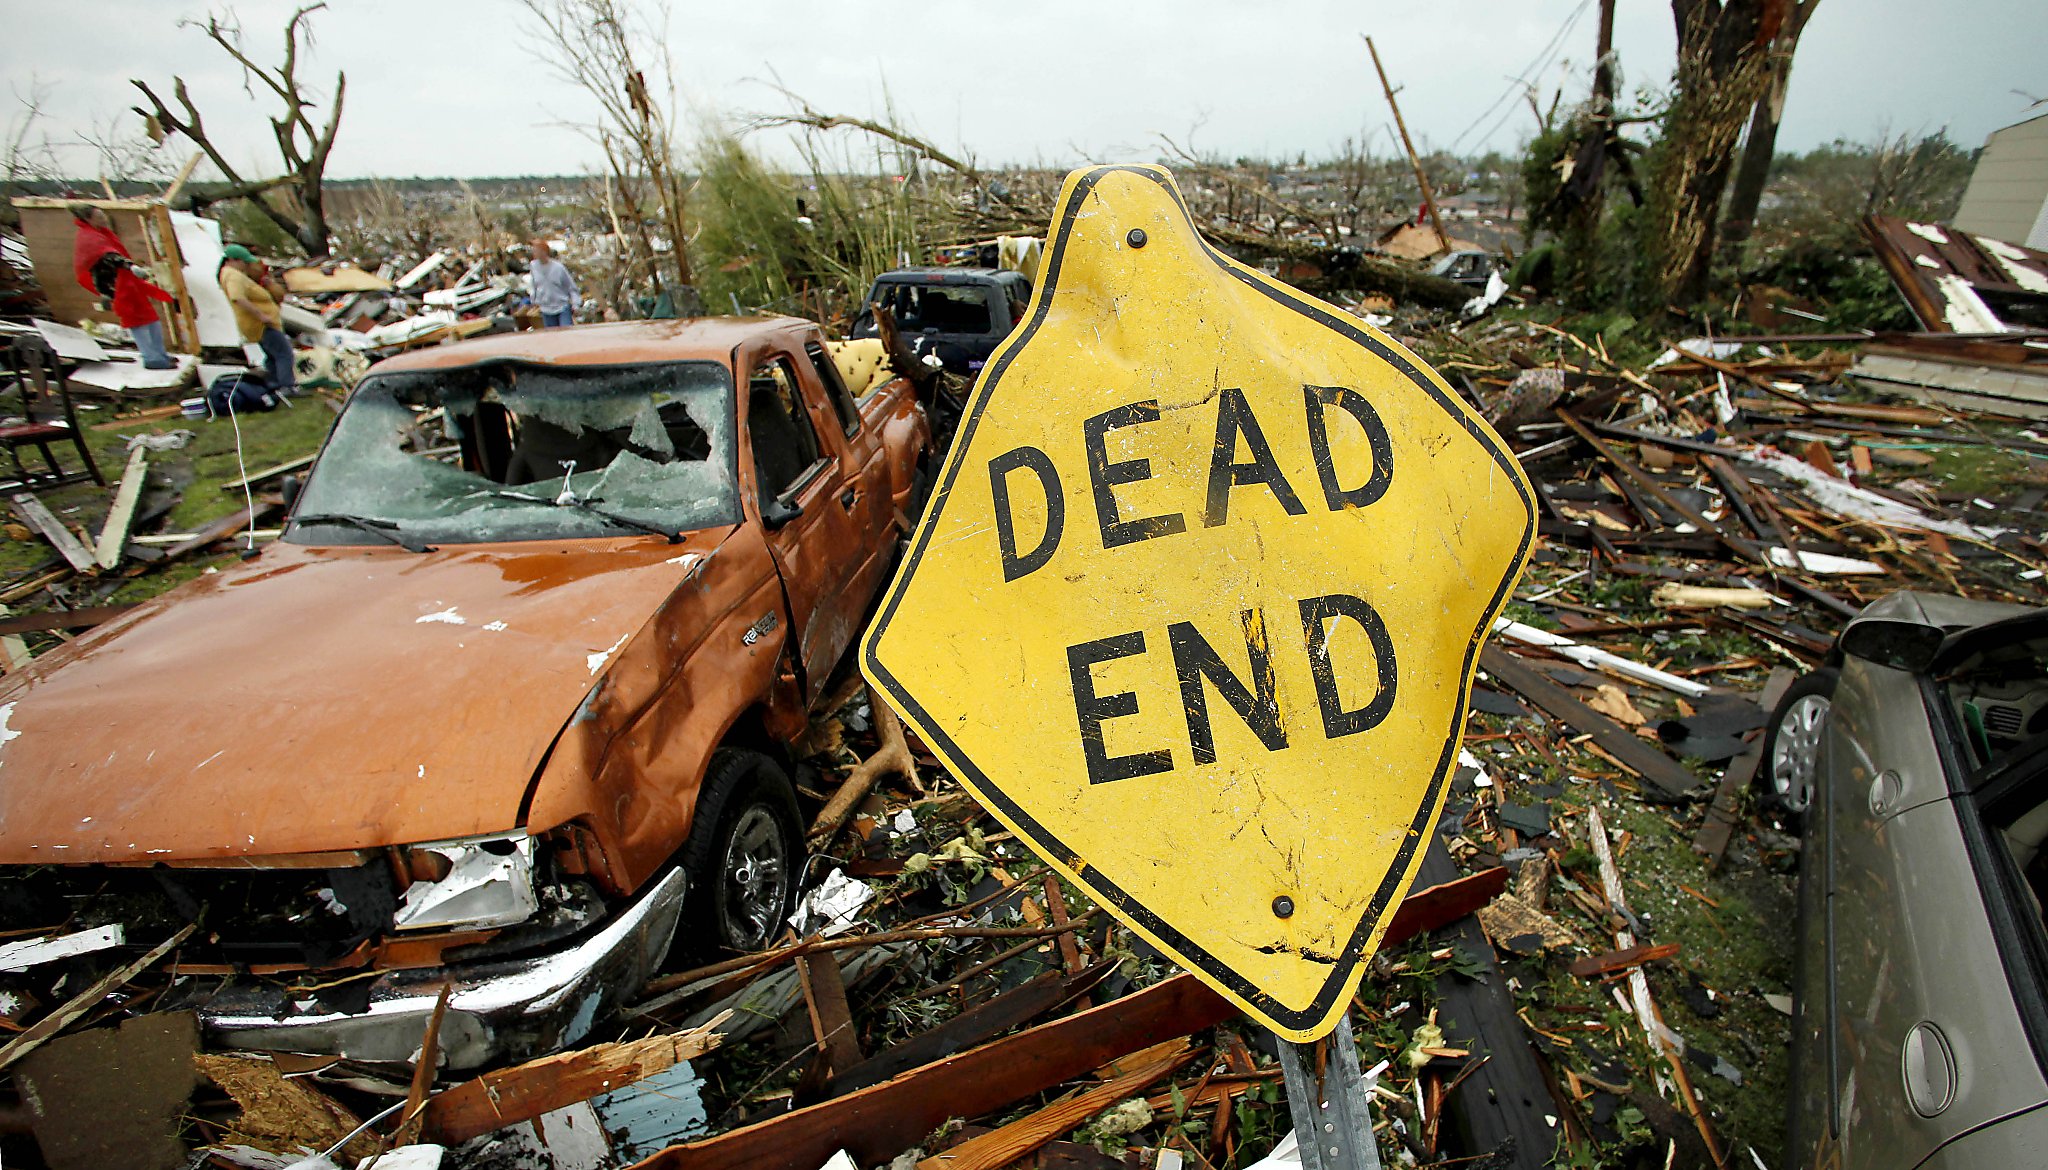 joplin missouri tornado death graphic photos